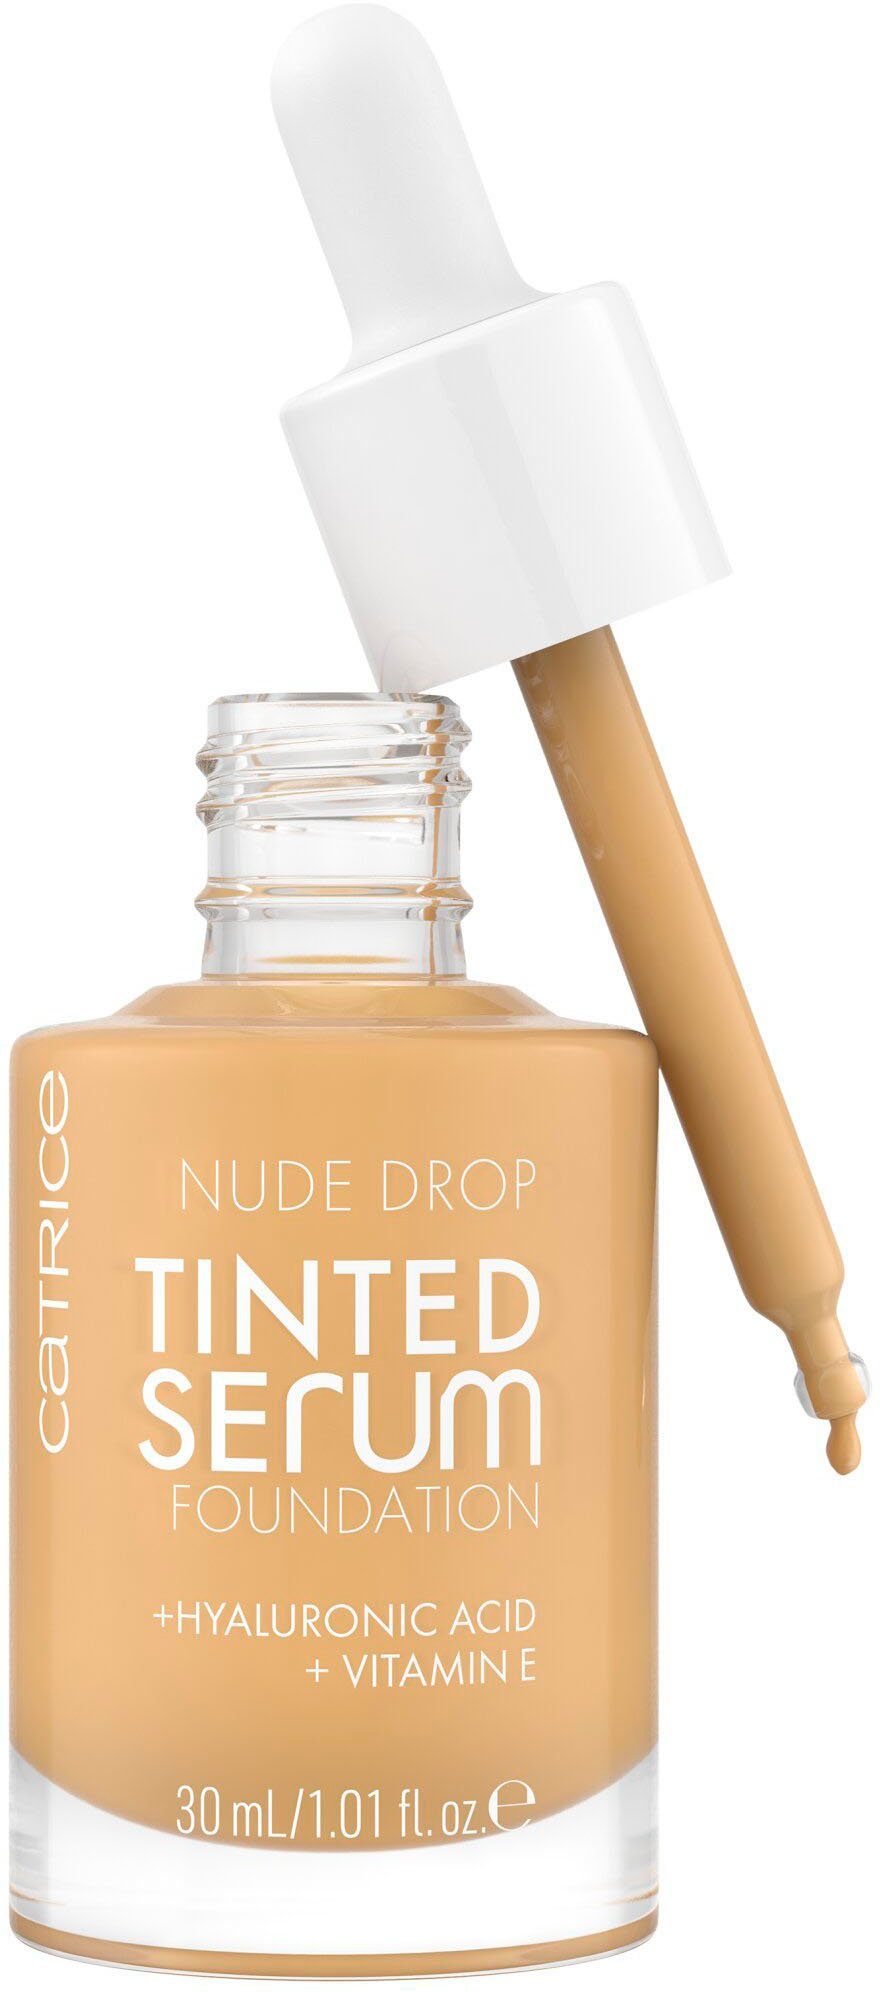 Foundation Catrice Nude Drop nude Foundation Tinted 038W Serum